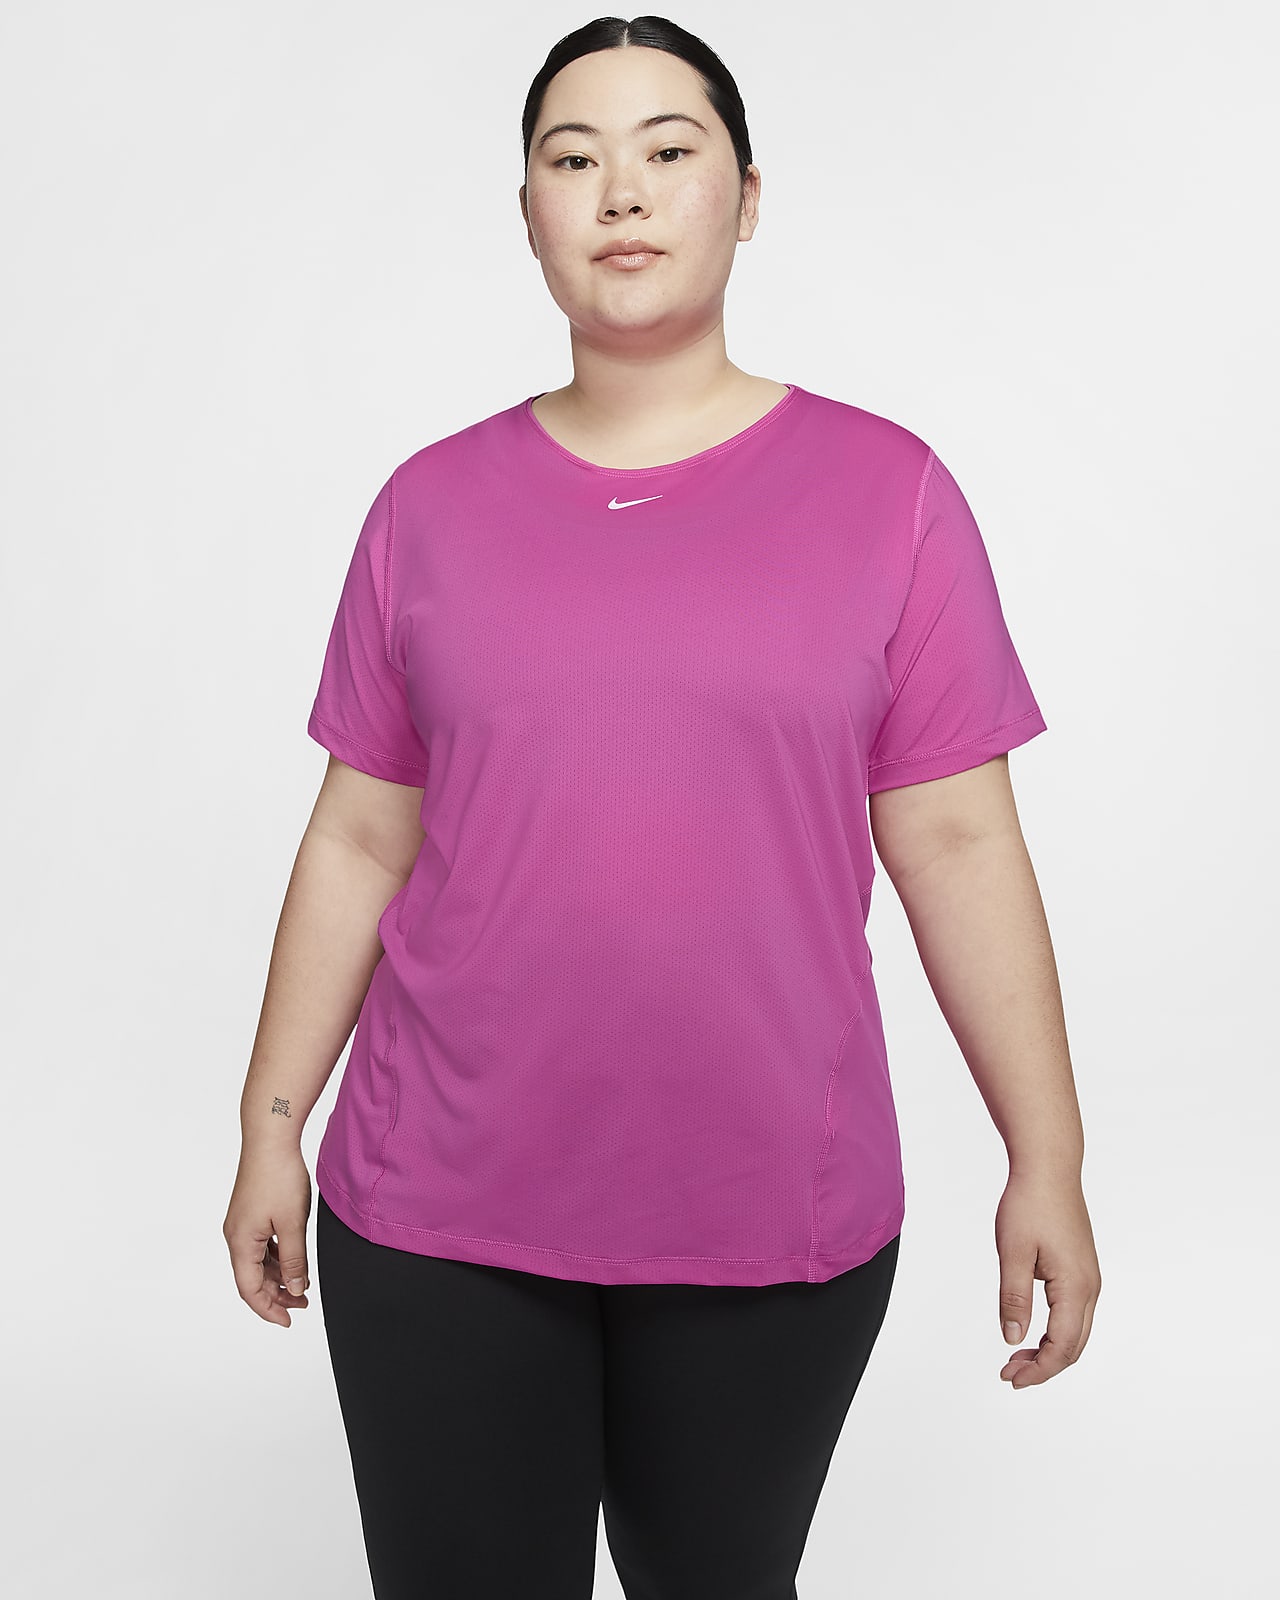 Nike Pro Women's Mesh Top (Plus Size 